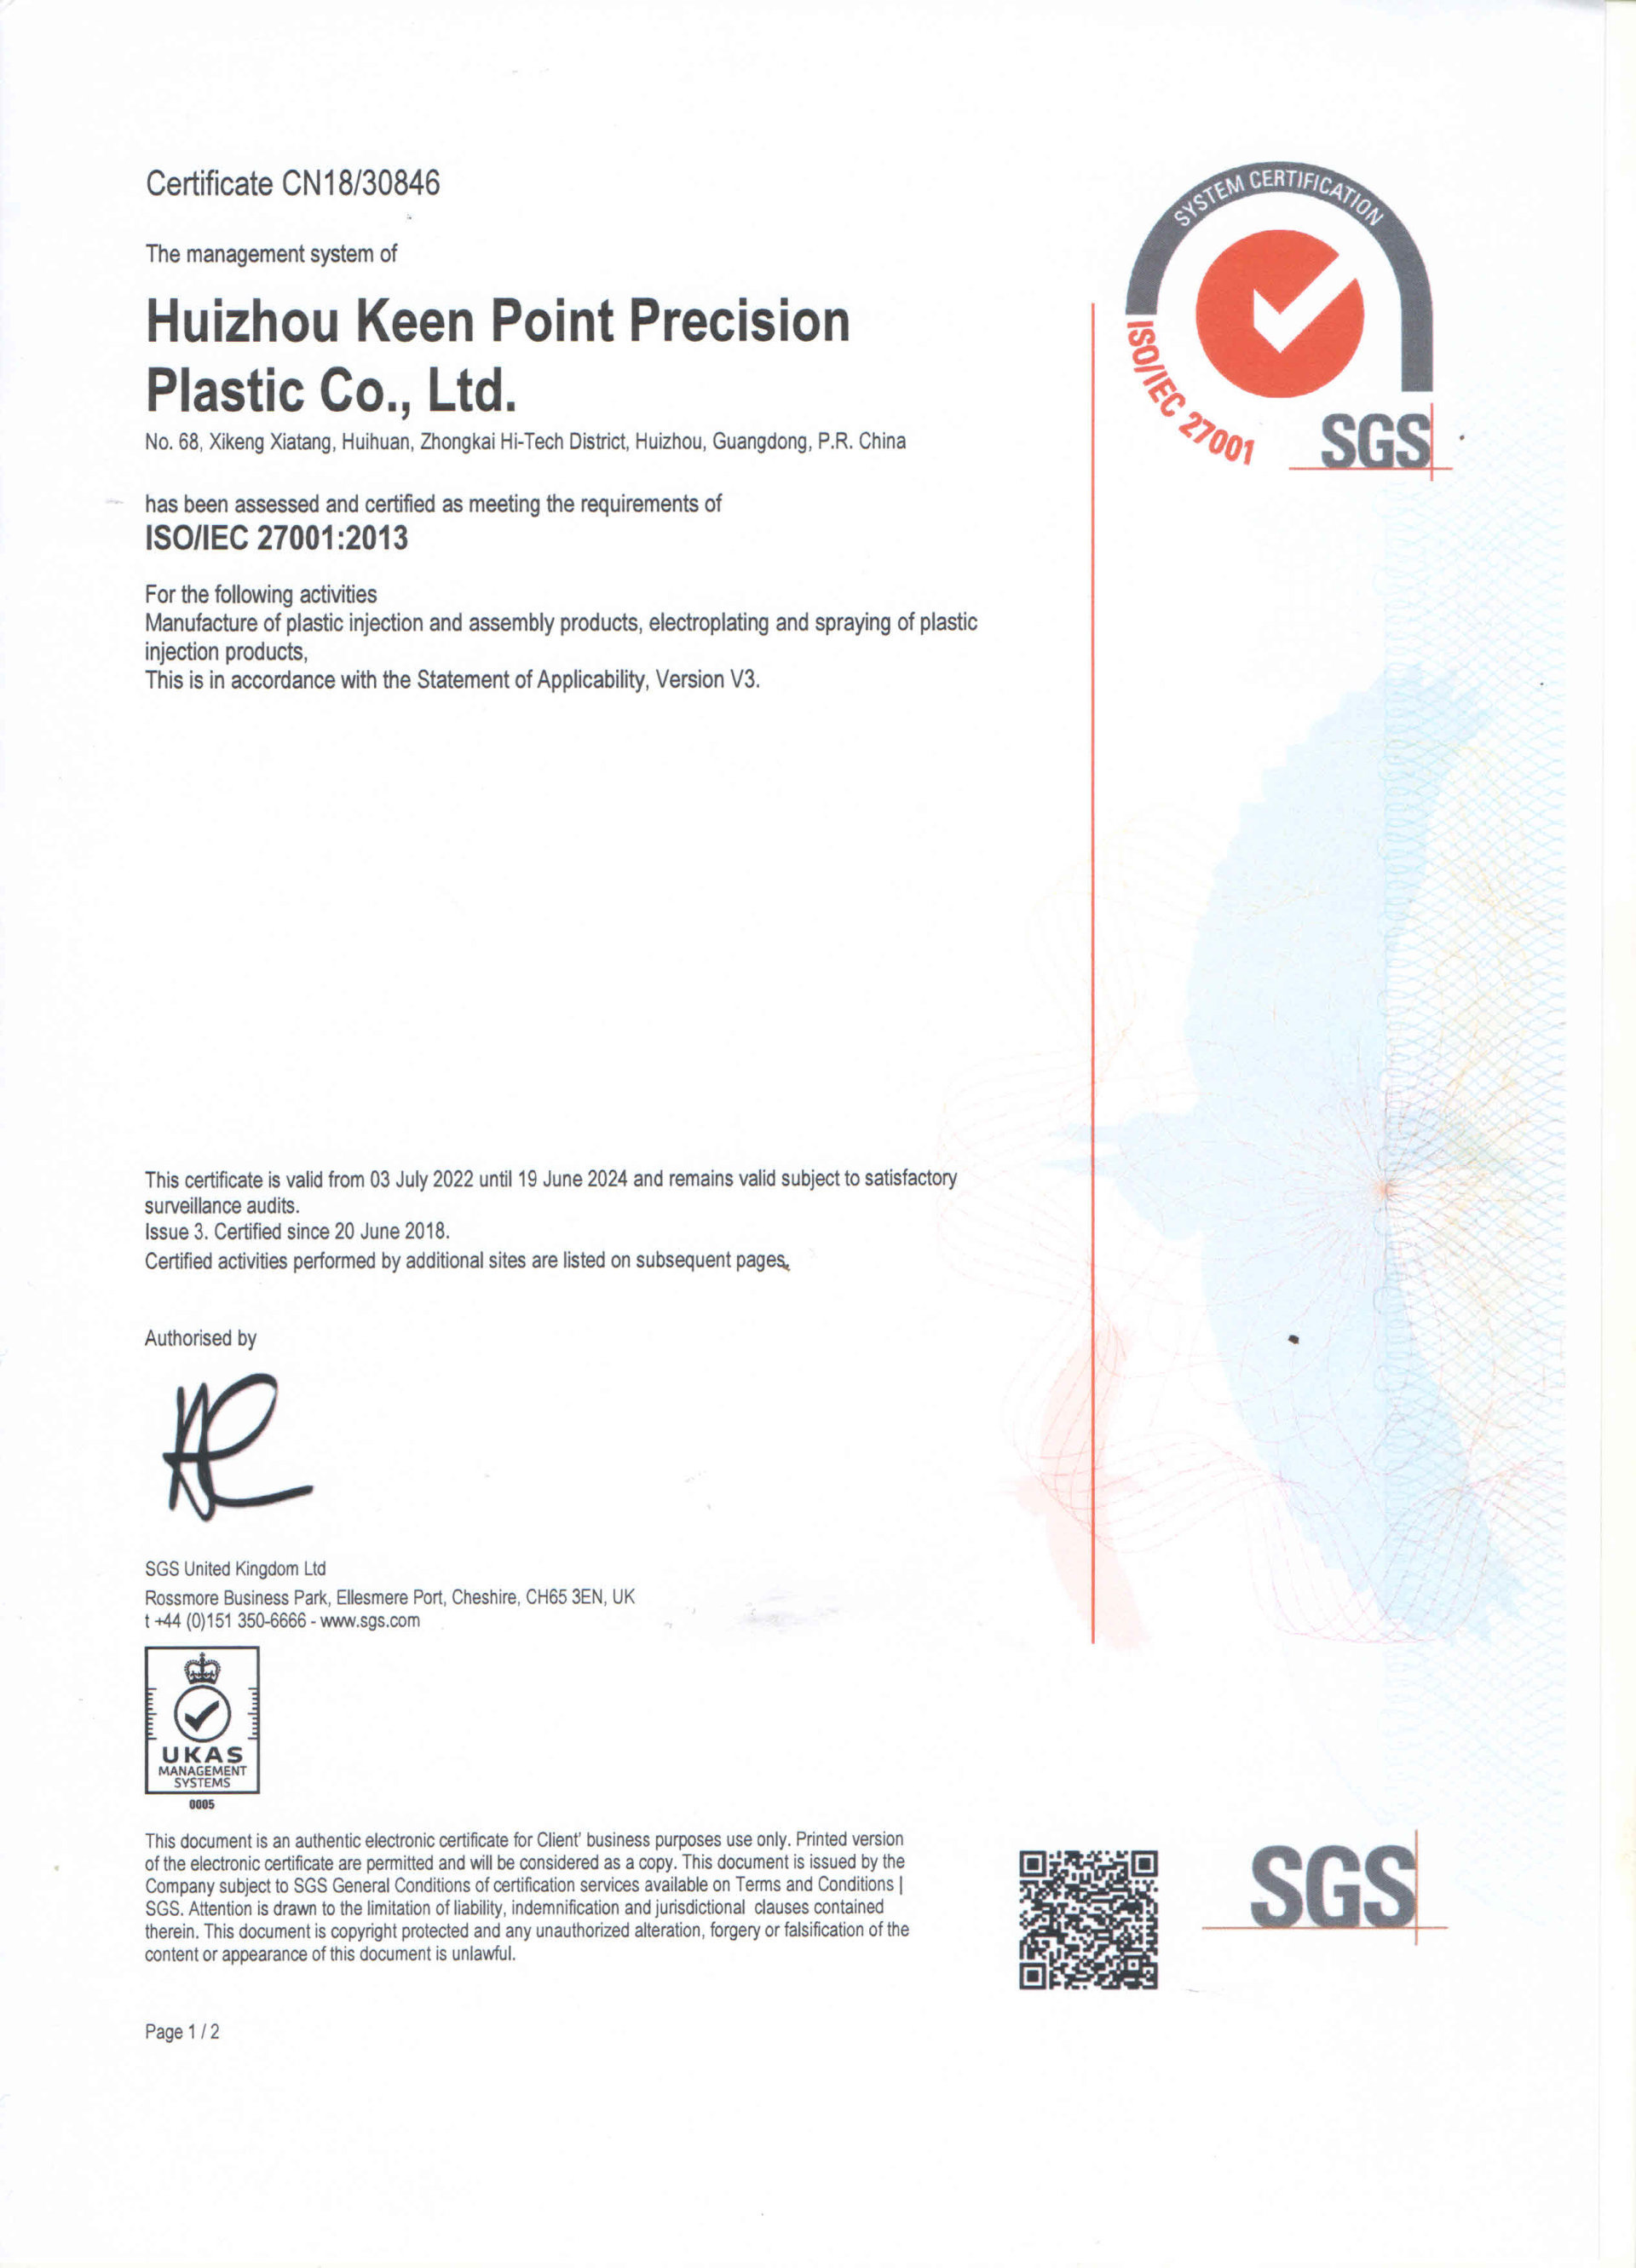 ISOIEC 27001 Certificate of Huizhou Keen Point Precision Plastic Co., Ltd.